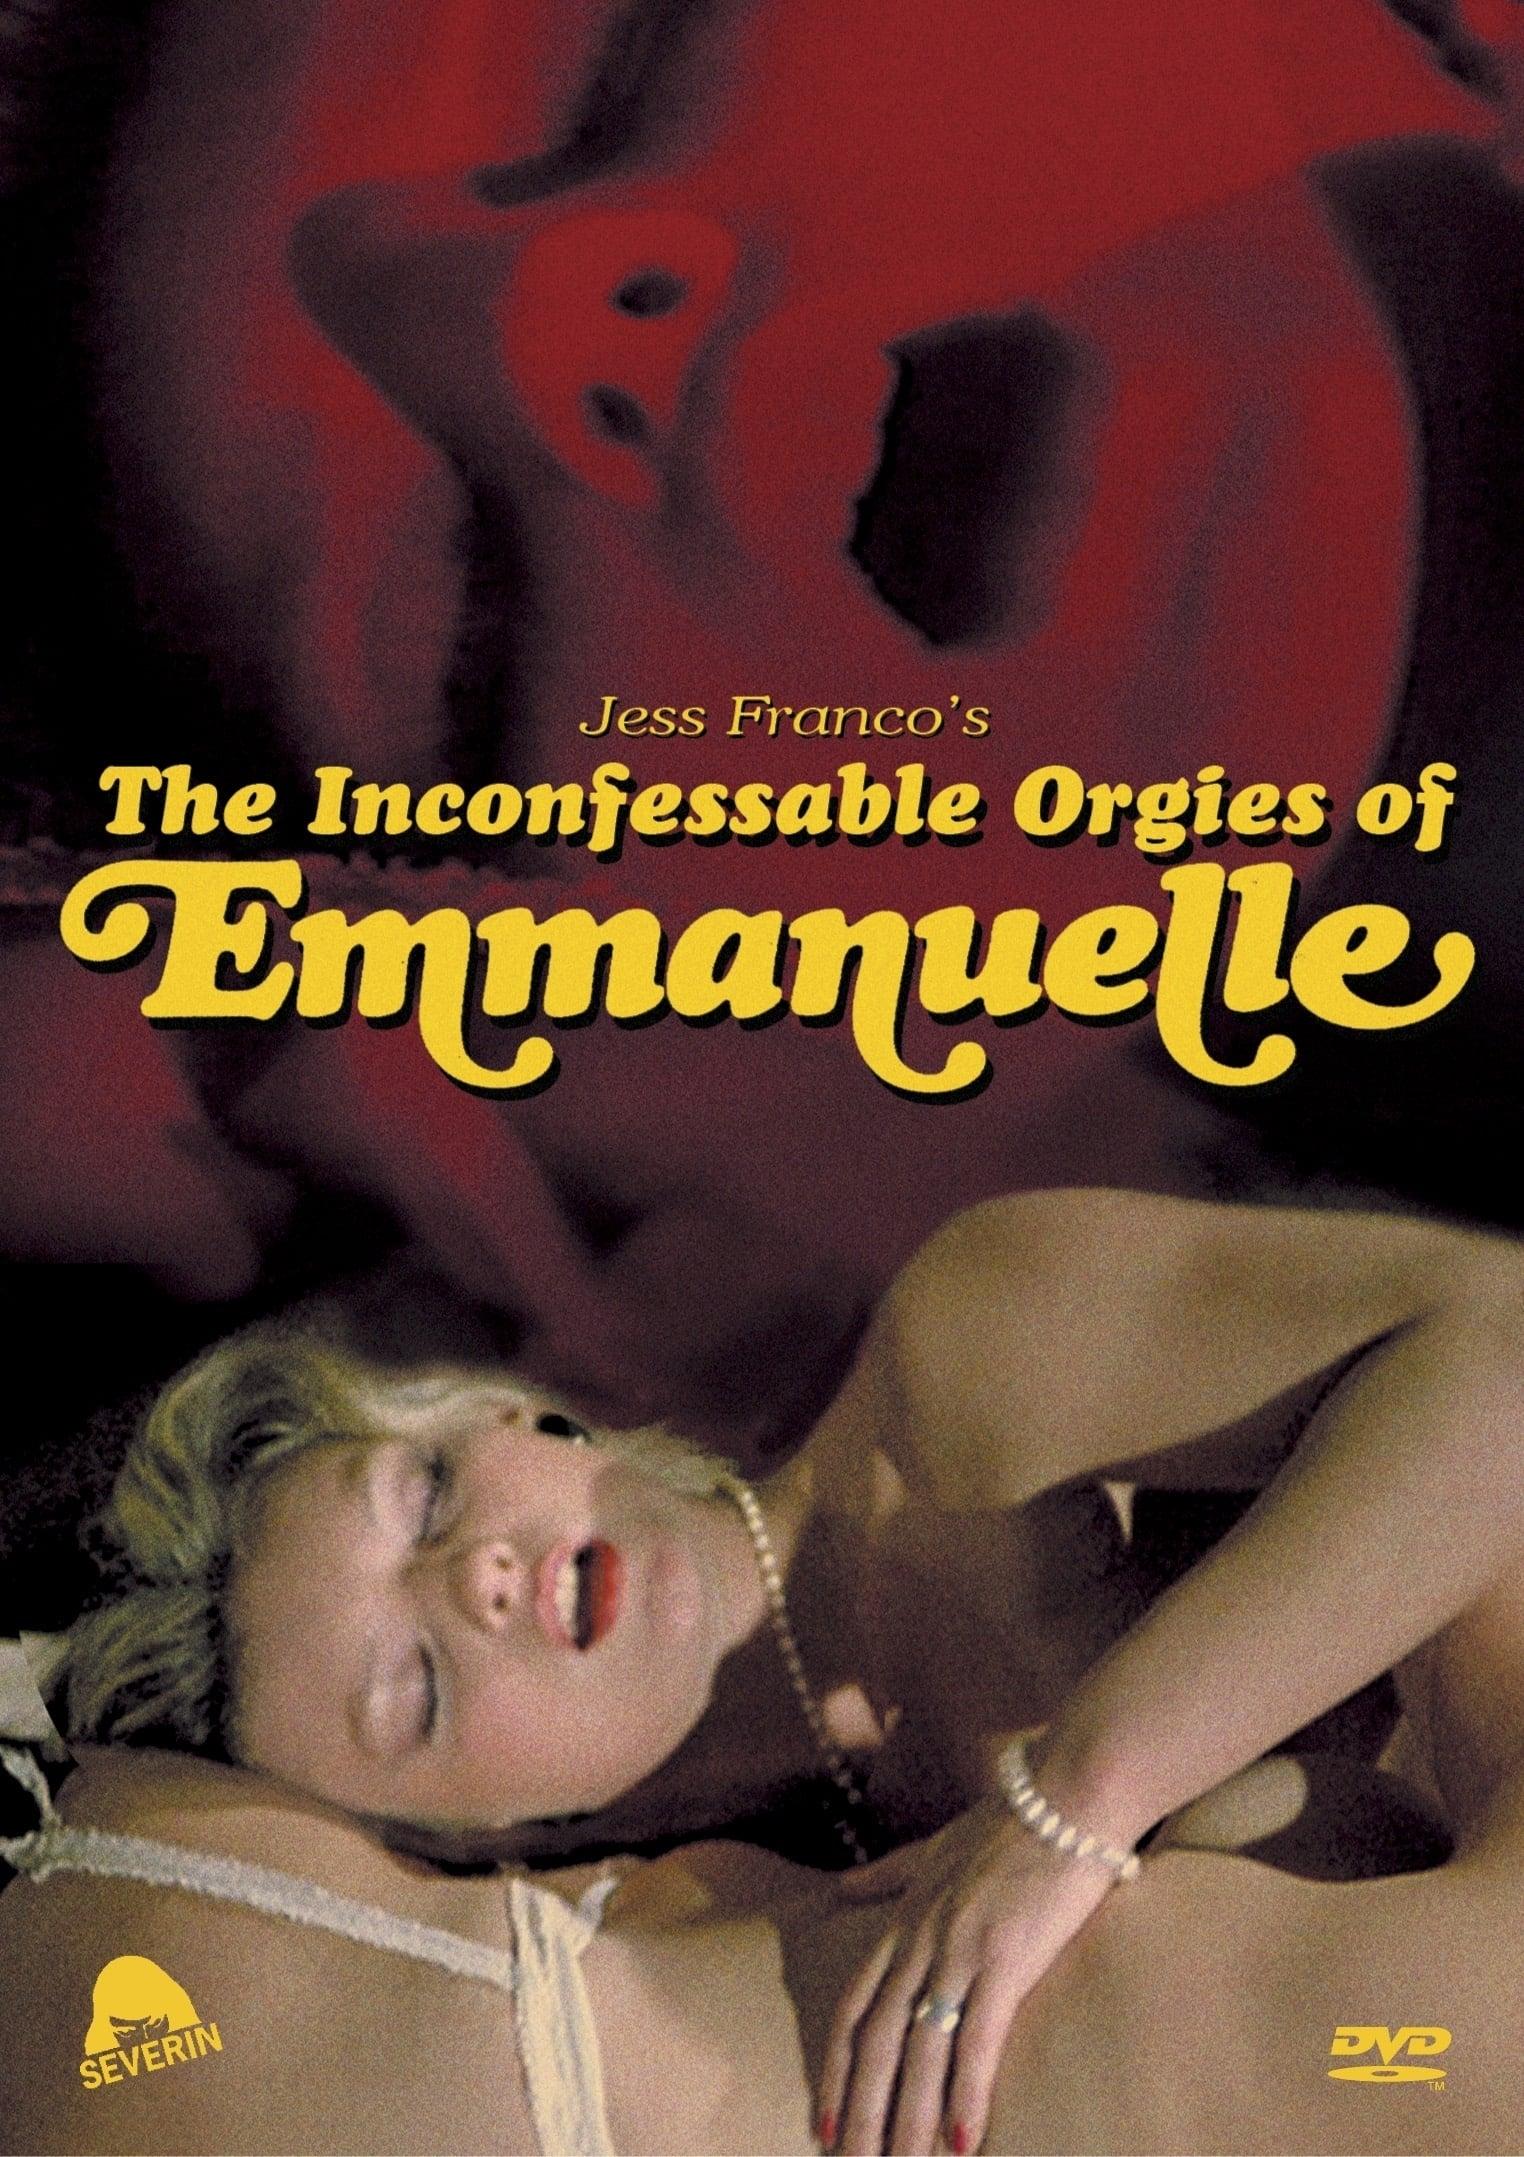 Emmanuelle Exposed poster